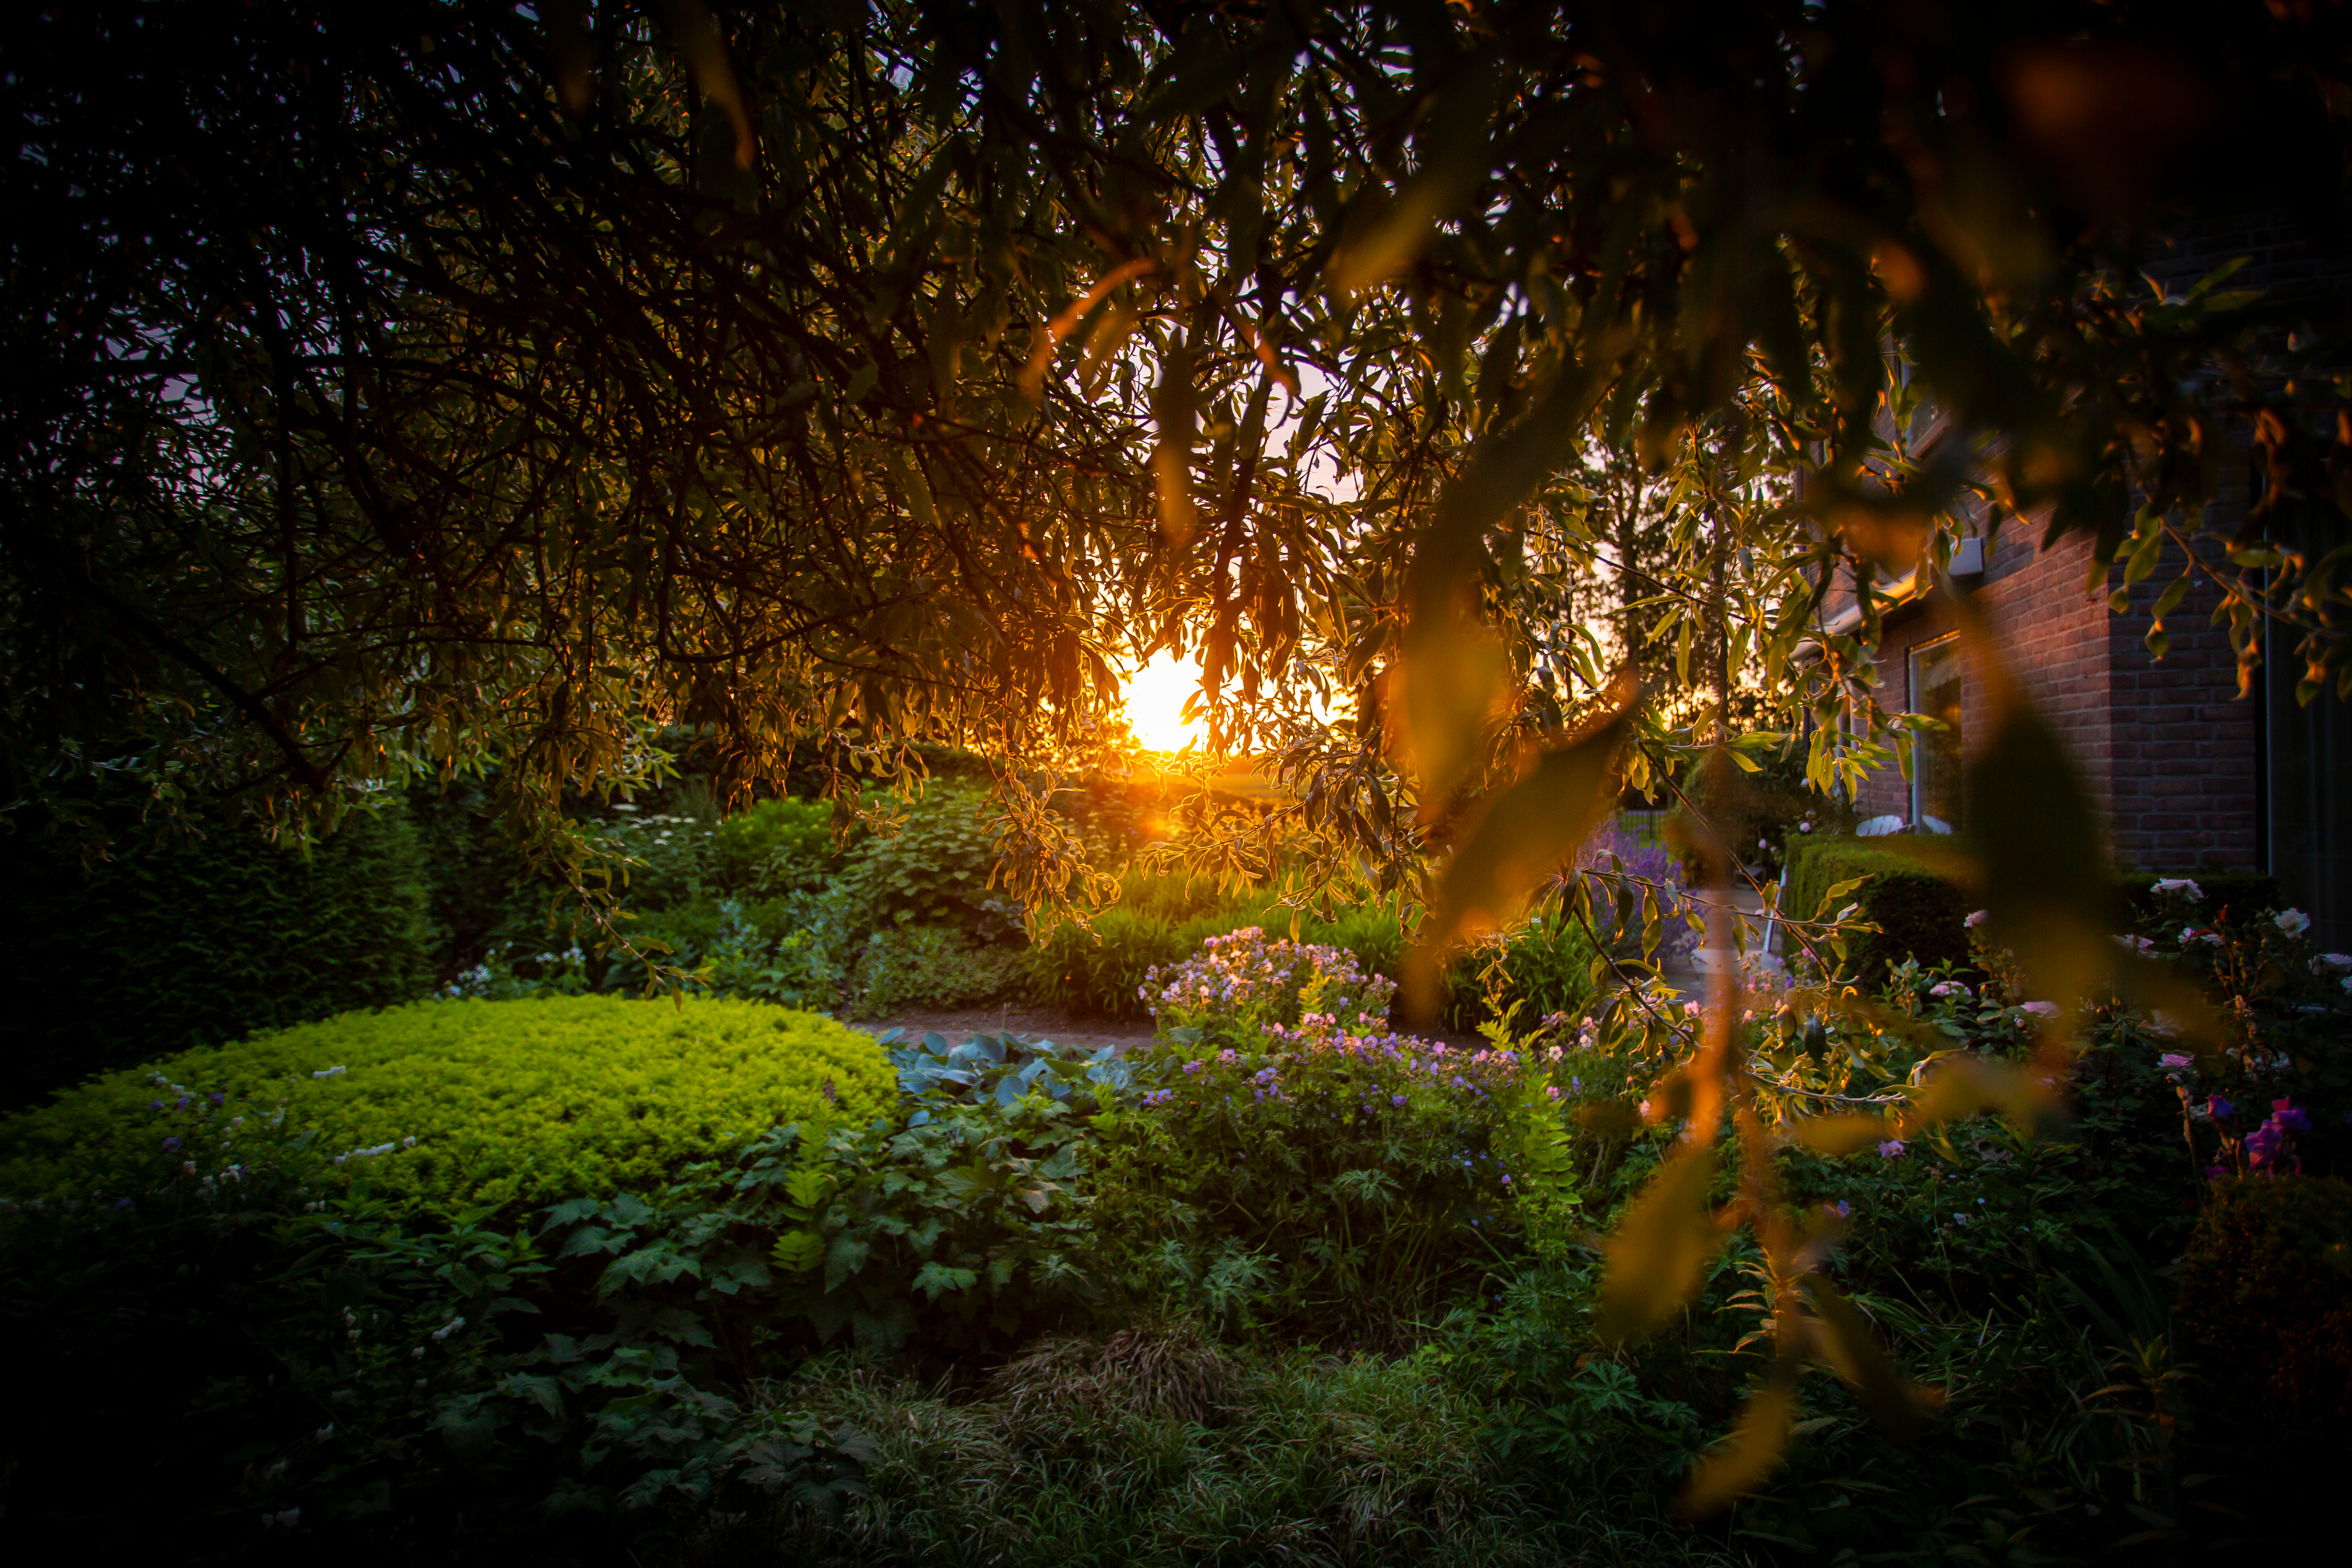 Garden - Horizontal view | Source: Shutterstock